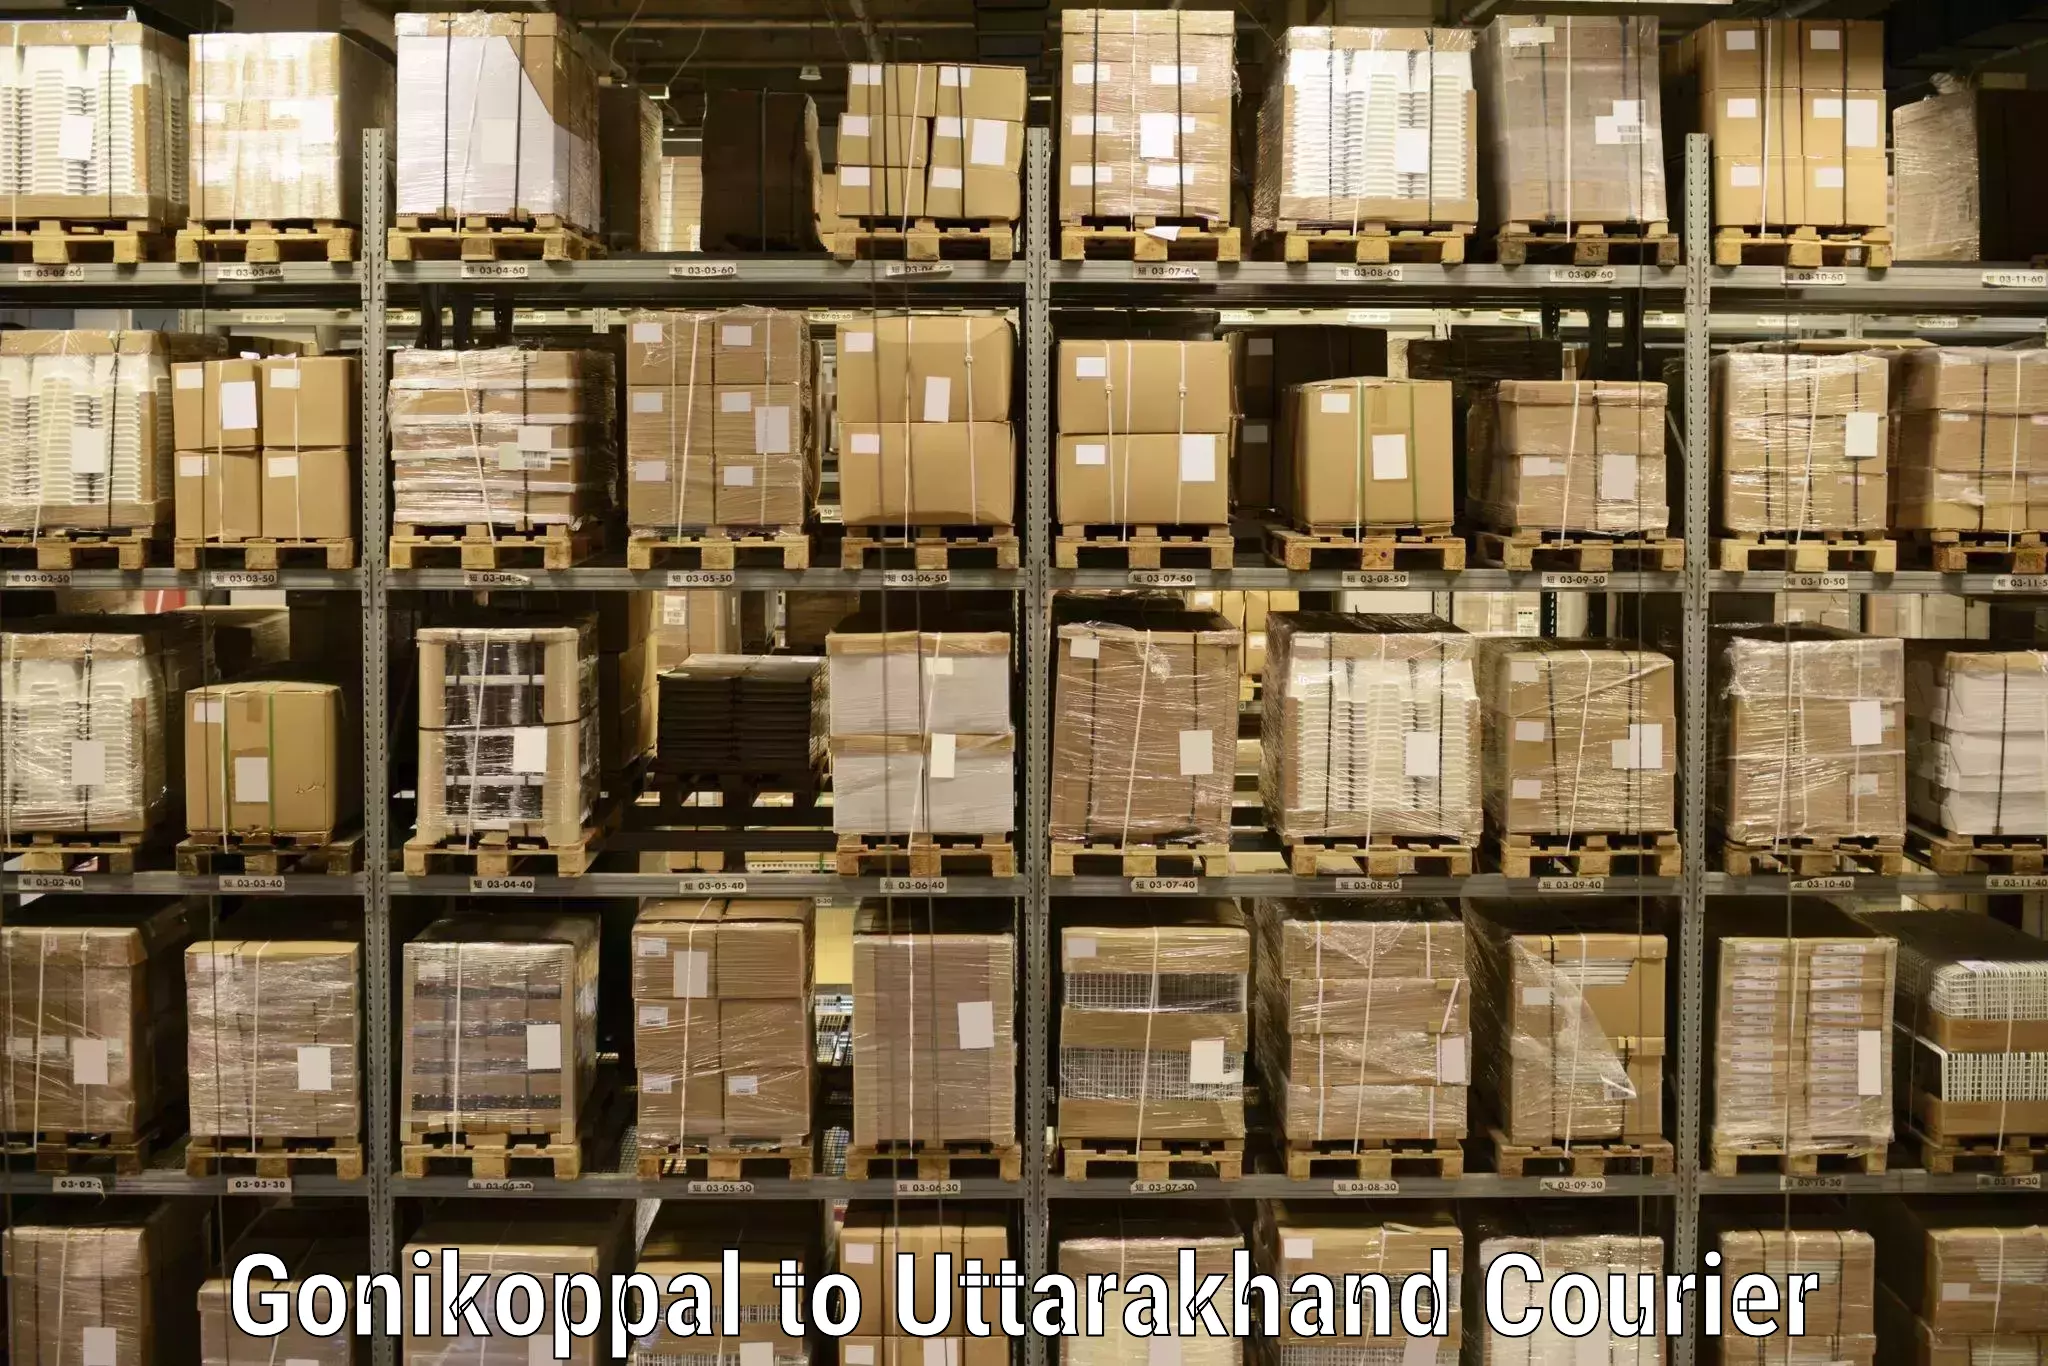 International parcel service Gonikoppal to Someshwar